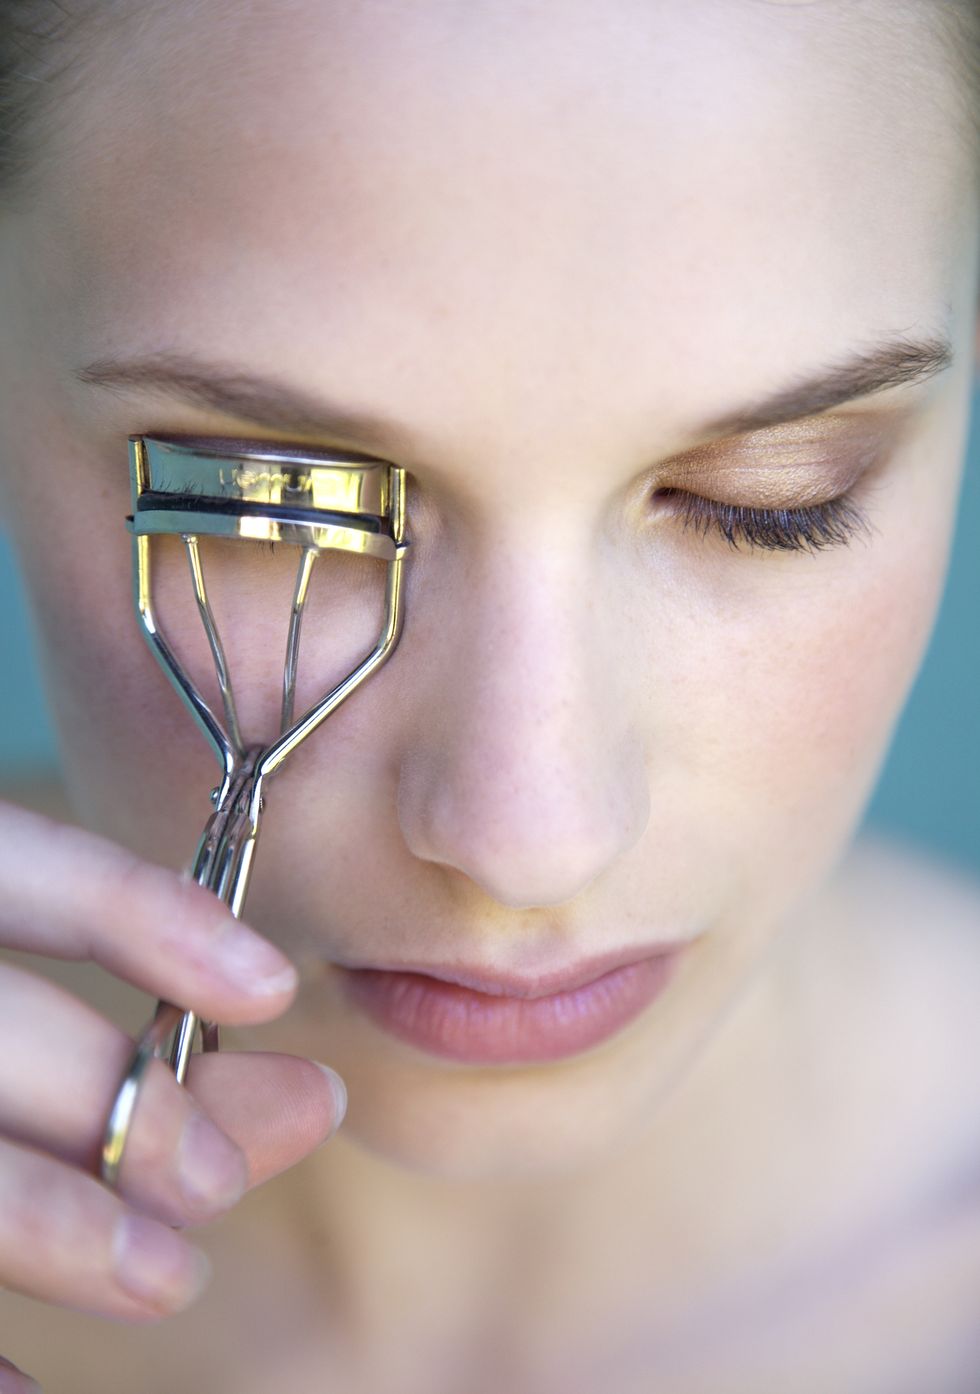 Woman using eyelash curler, close-up